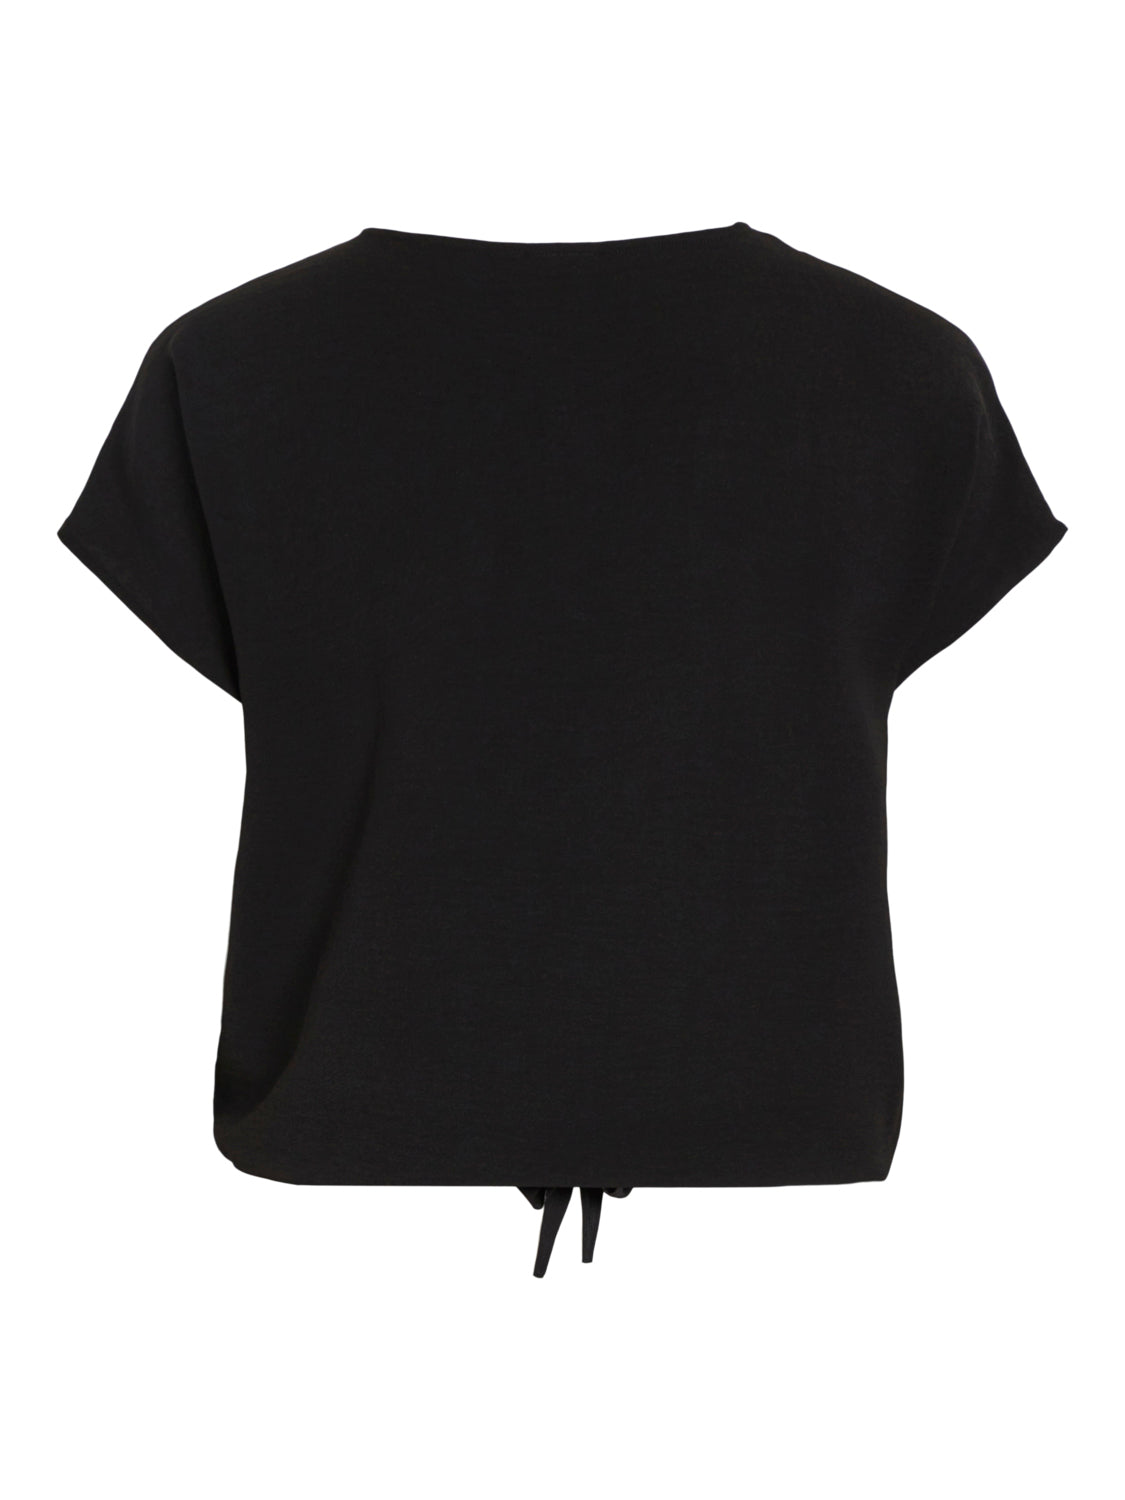 VIRASHA T-Shirts & Tops - Black